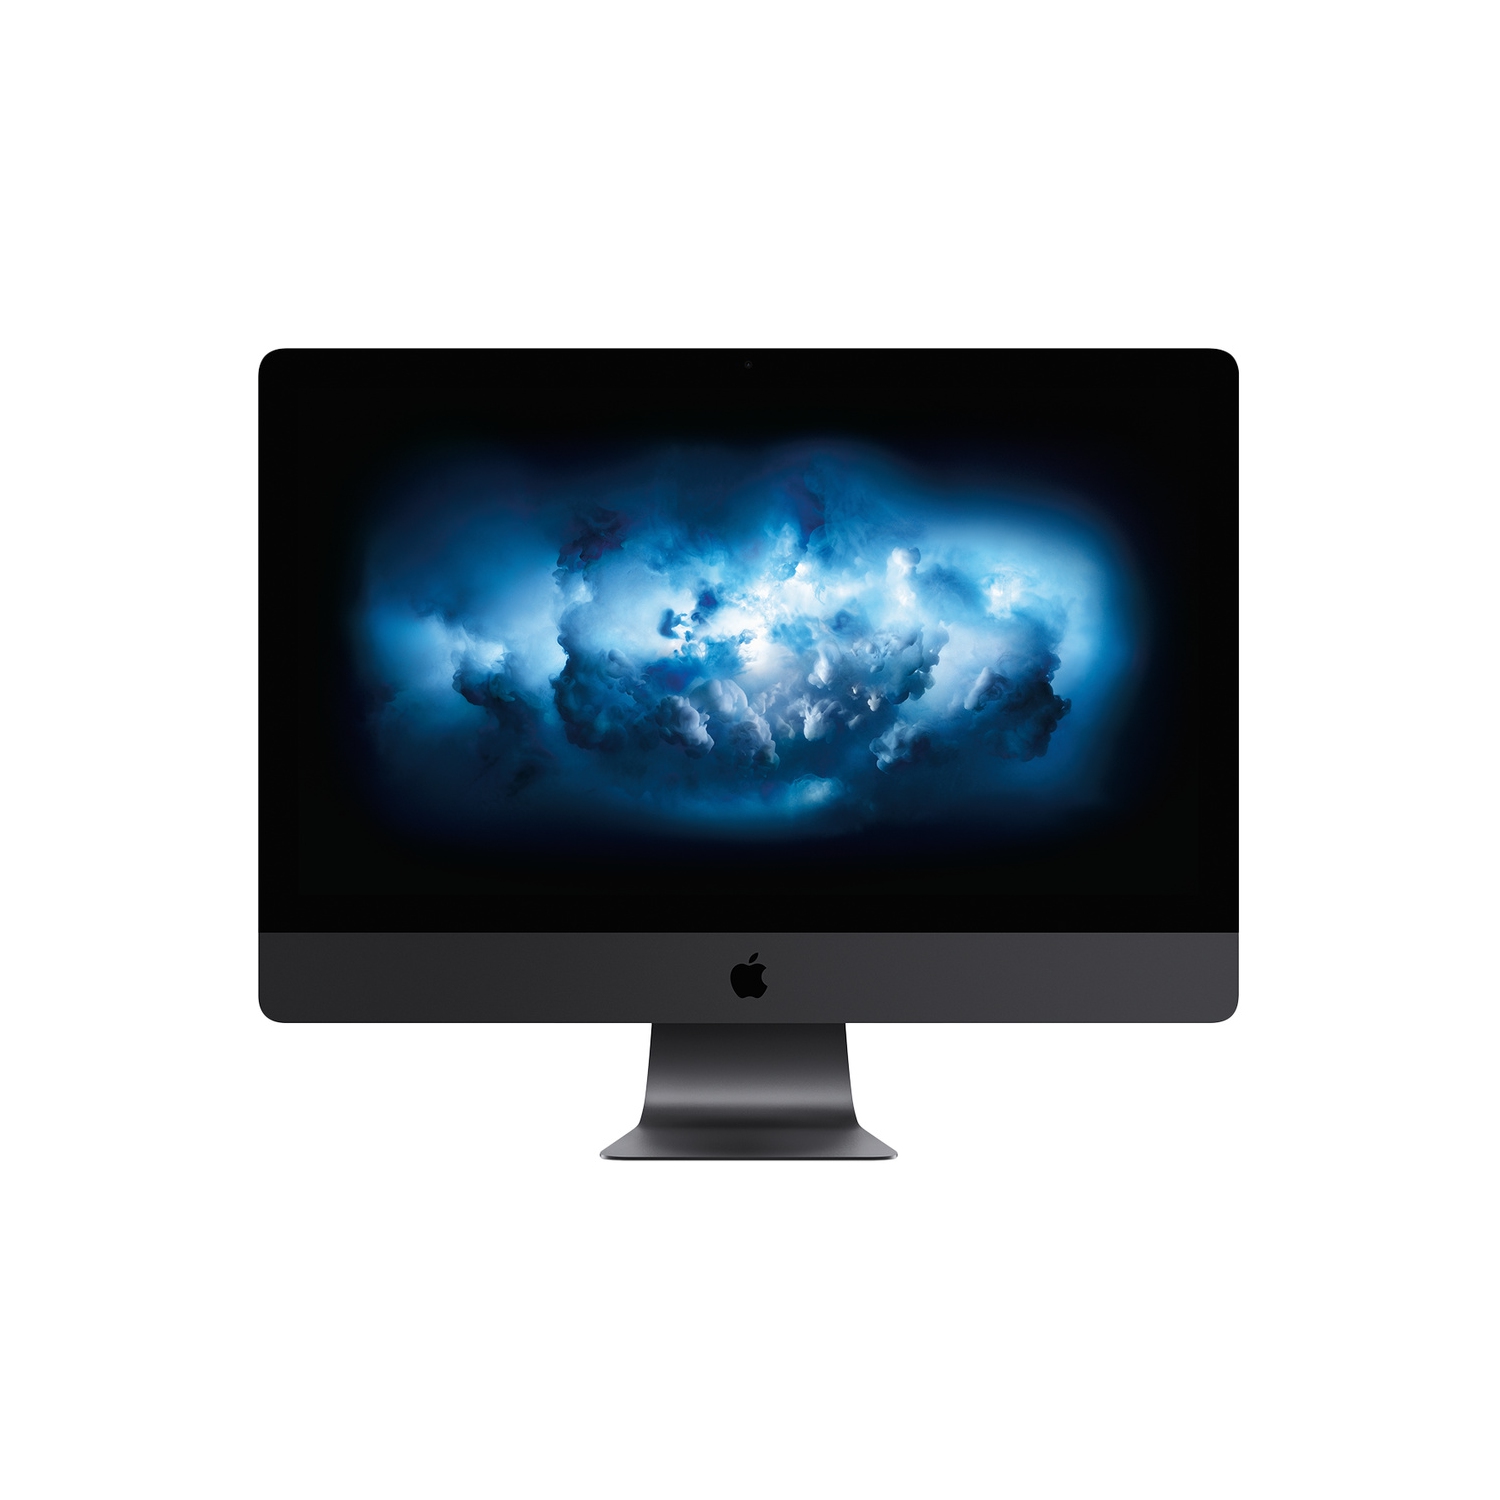 Refurbished (Good) - Apple iMac Pro 27" Retina 5K Display (A1862) - Intel Xeon 8 Core 3.2GHz, W-2140B RAM, 128GB 1TB NVME SSD, Radeon Pro Vega 64 16GB Graphic Card